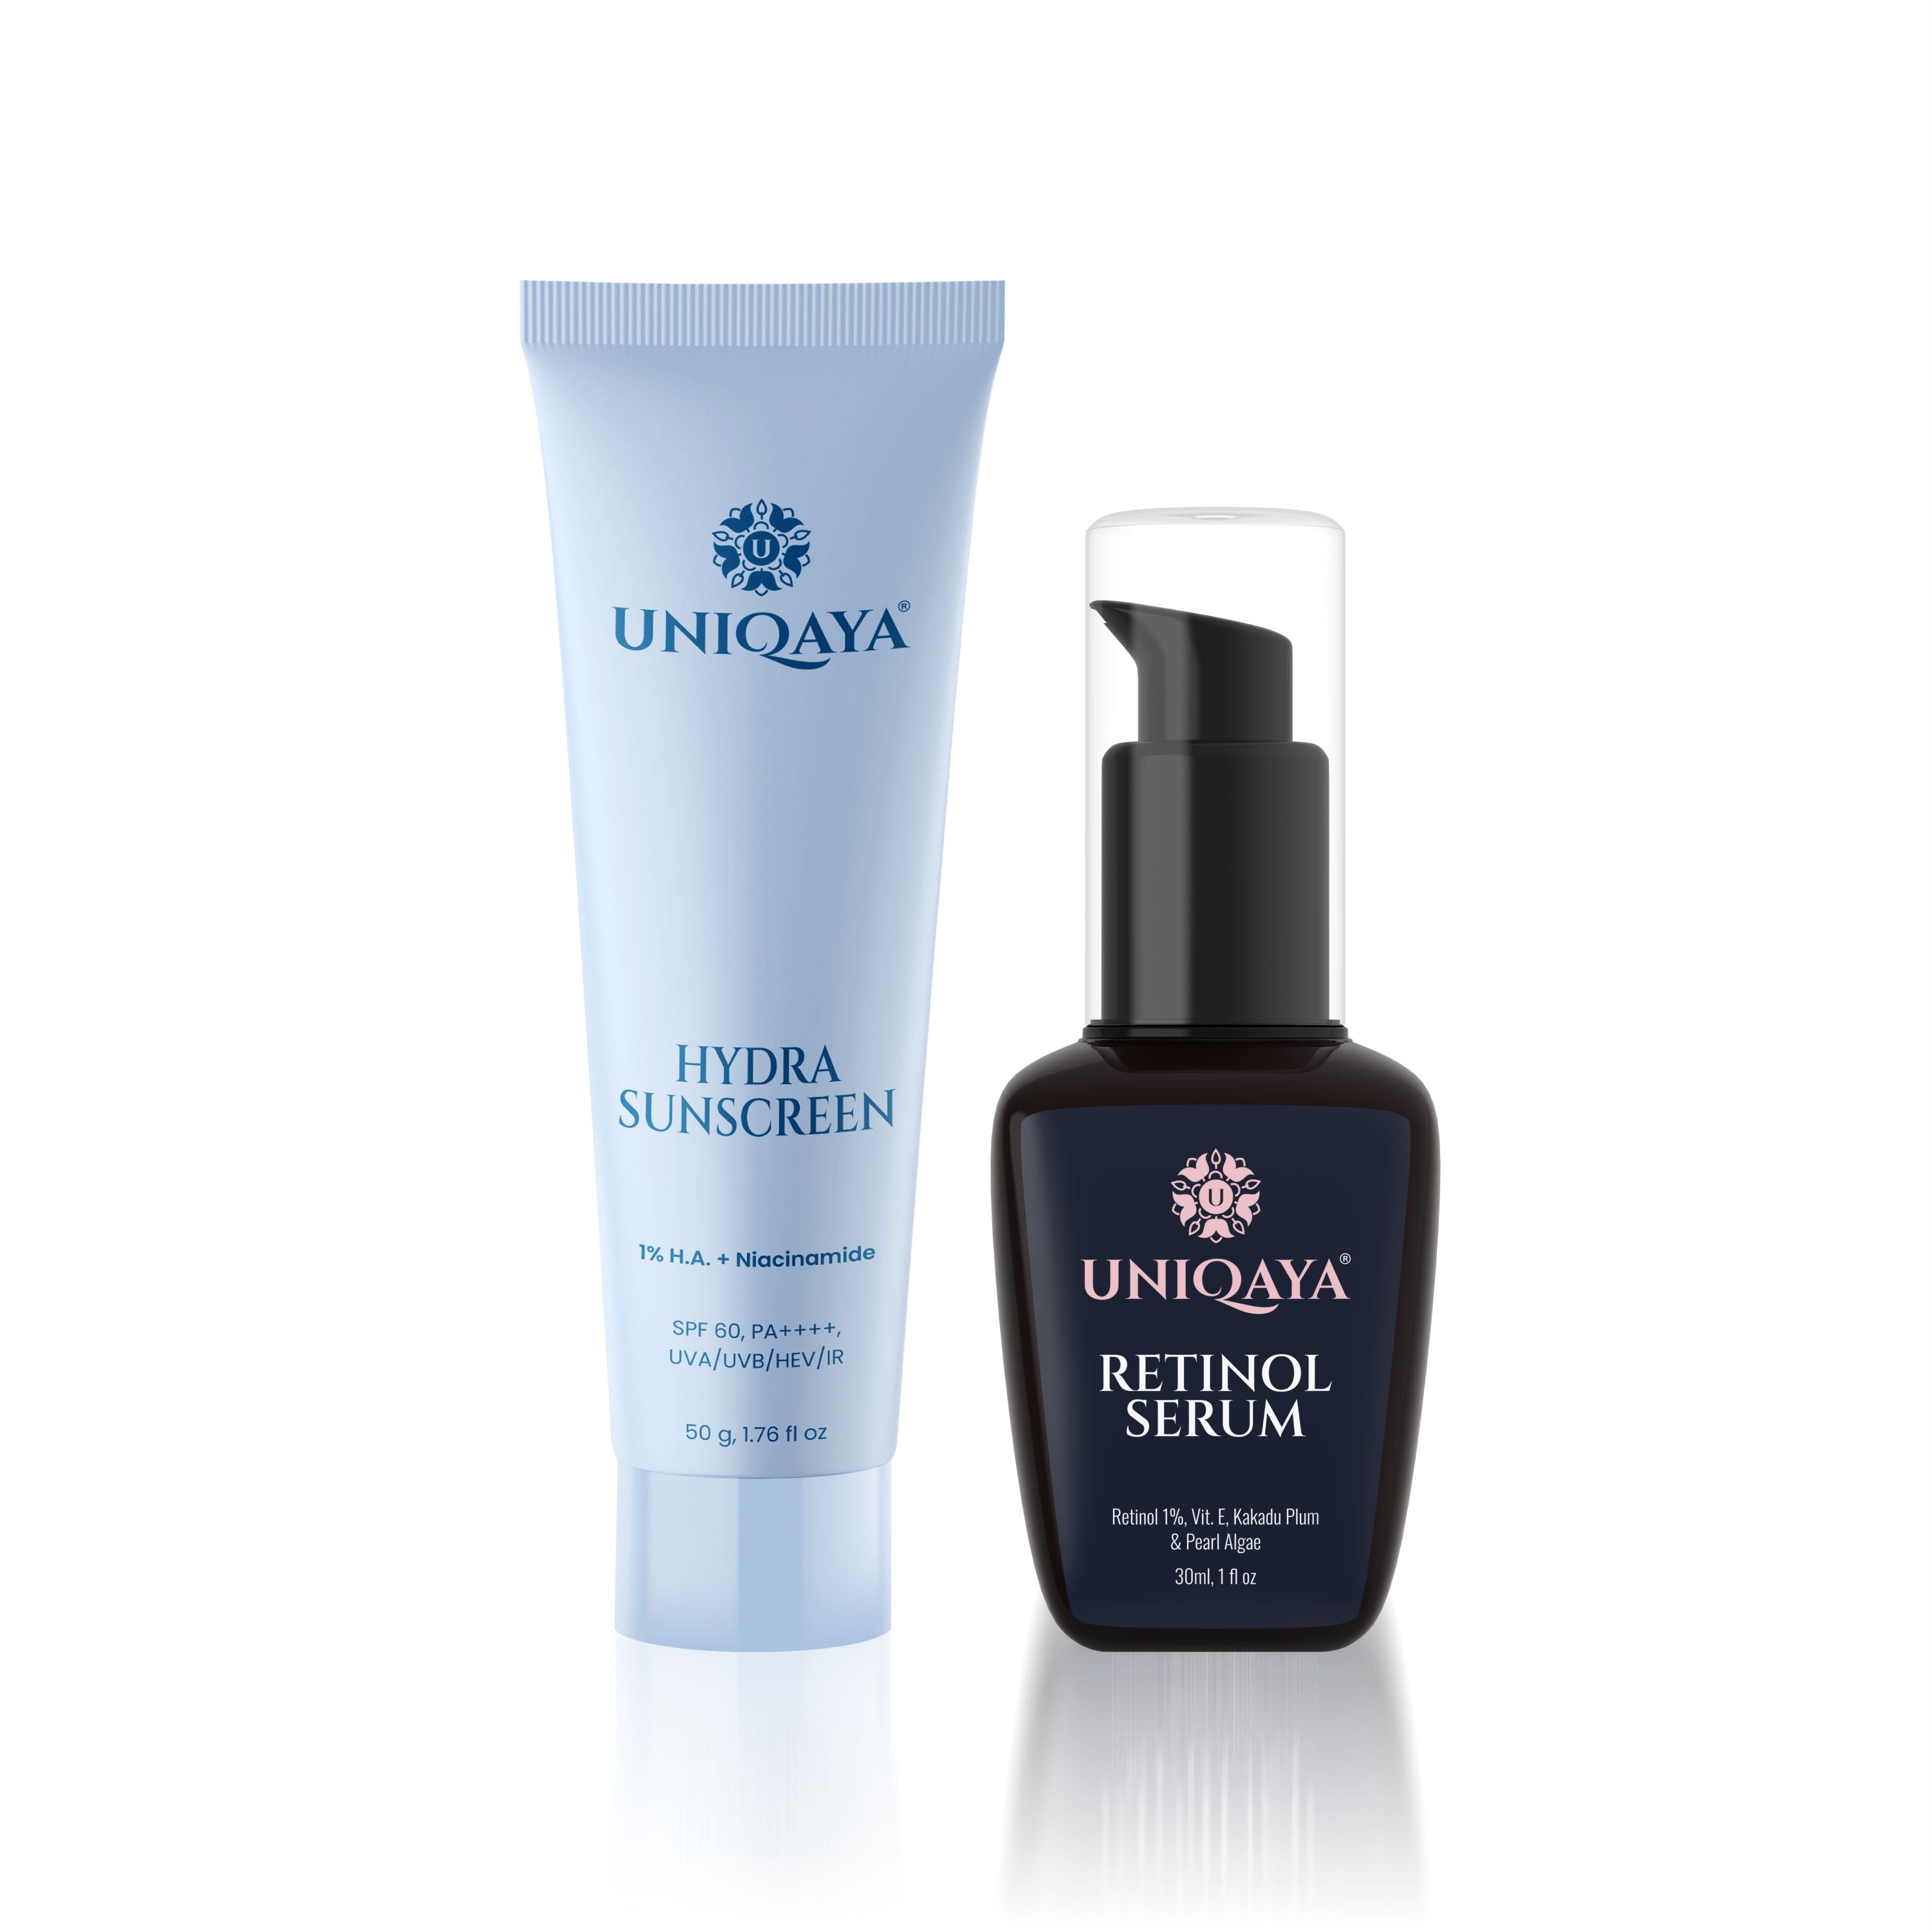 Hydra Sunscreen & 1% Encapsulated Vitamin E Retinol Face Serum | Skin Care Combo